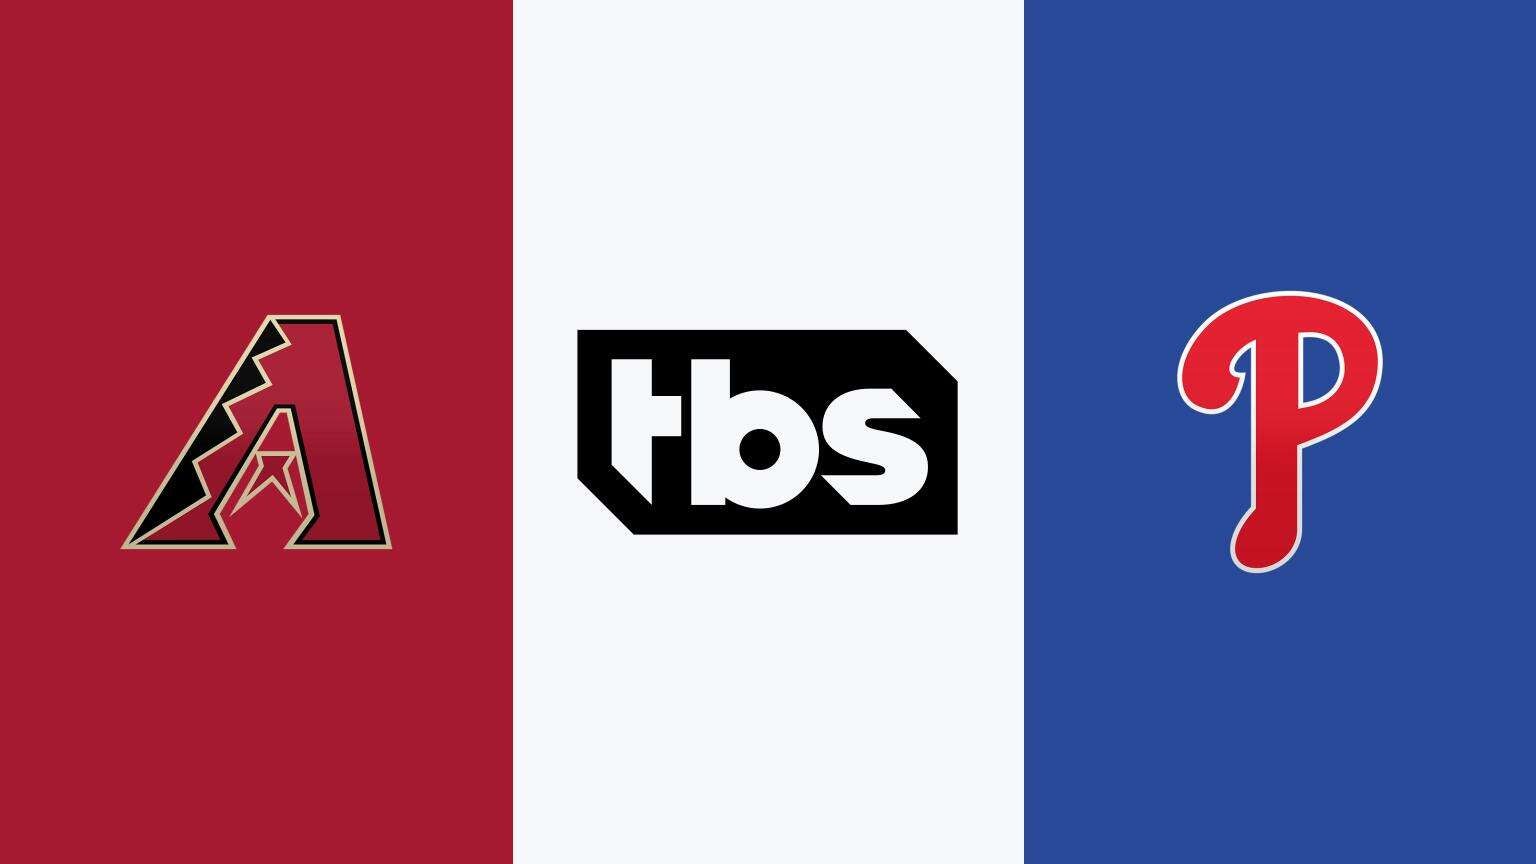 TBS to Present Latino-Focused 'MLB Postseason ALTcast: Peloteros